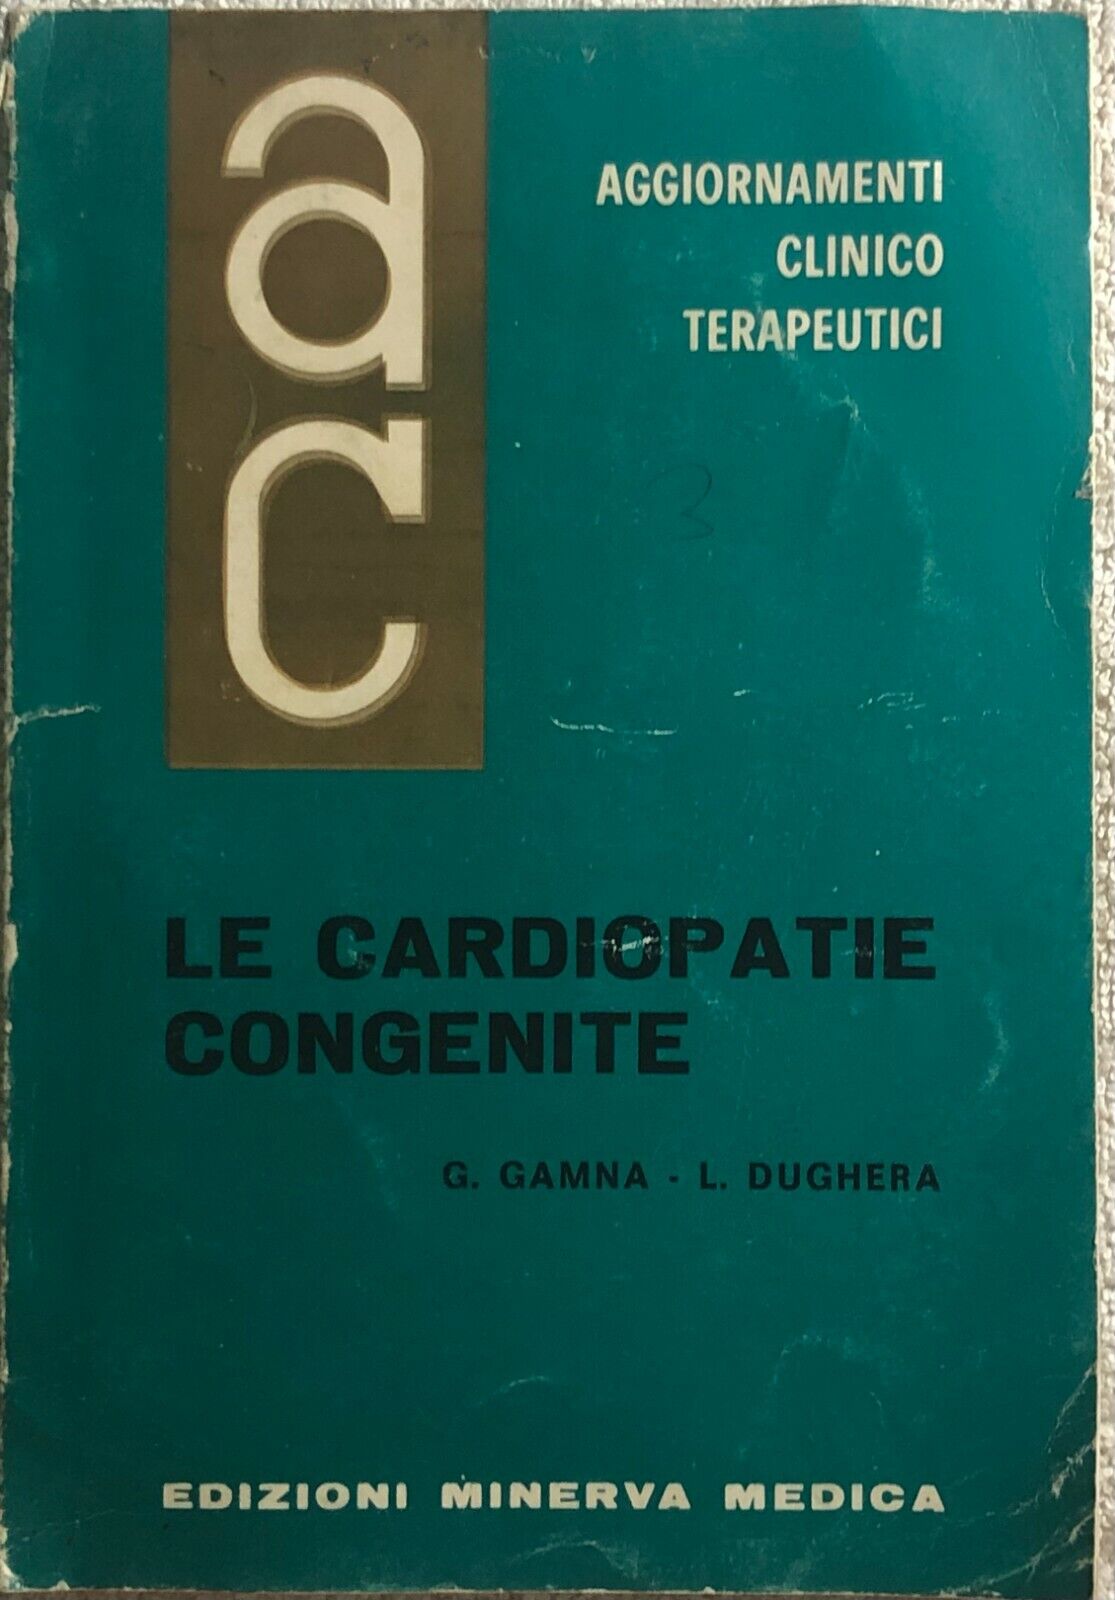 Le cardiopatie congenite di G. Gamna - L. Dughera,  1965,  Edizioni Minerva Medi